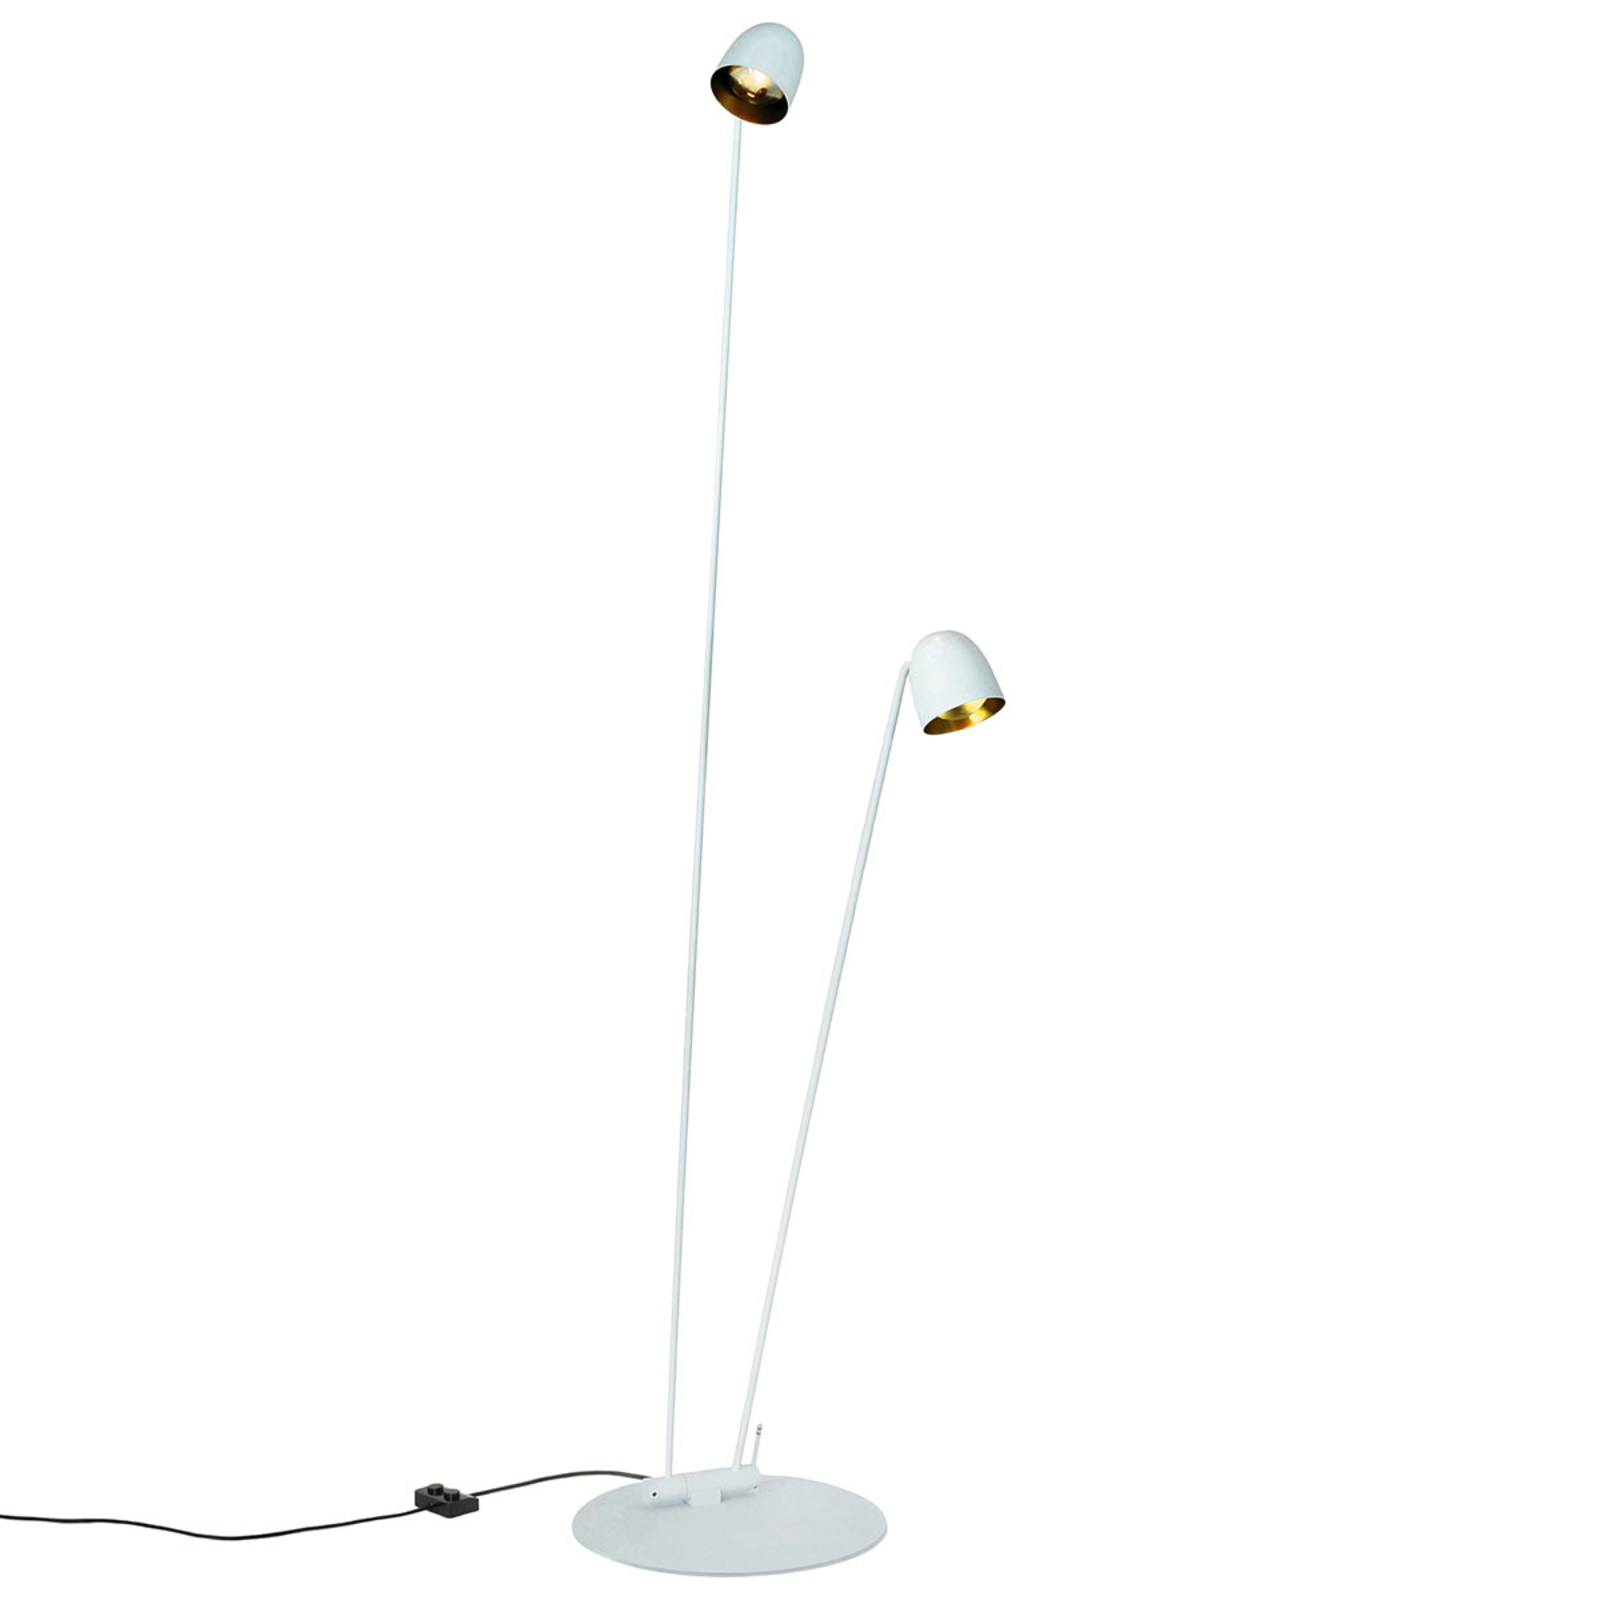 Speers F flexibly adjustable LED floor lamp white